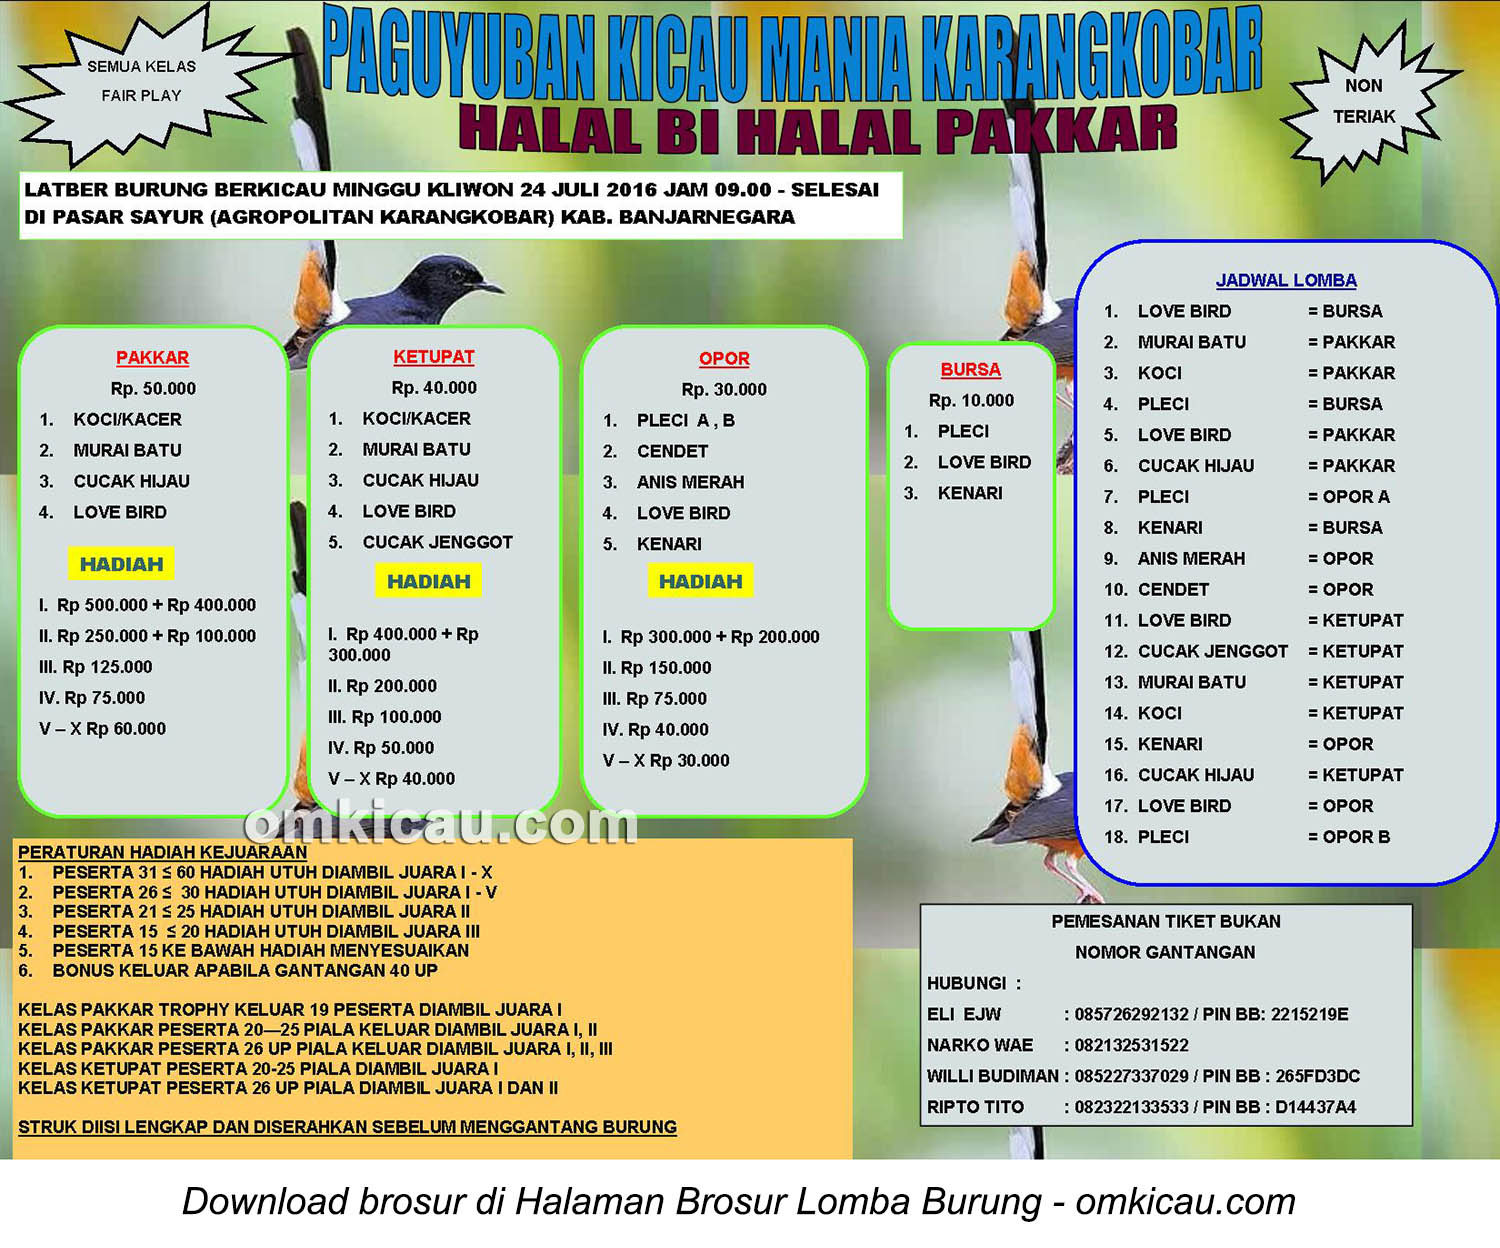 Brosur Latber Halal Bi Halal Pakkar, Banjarnegara, 24 Juli 2016